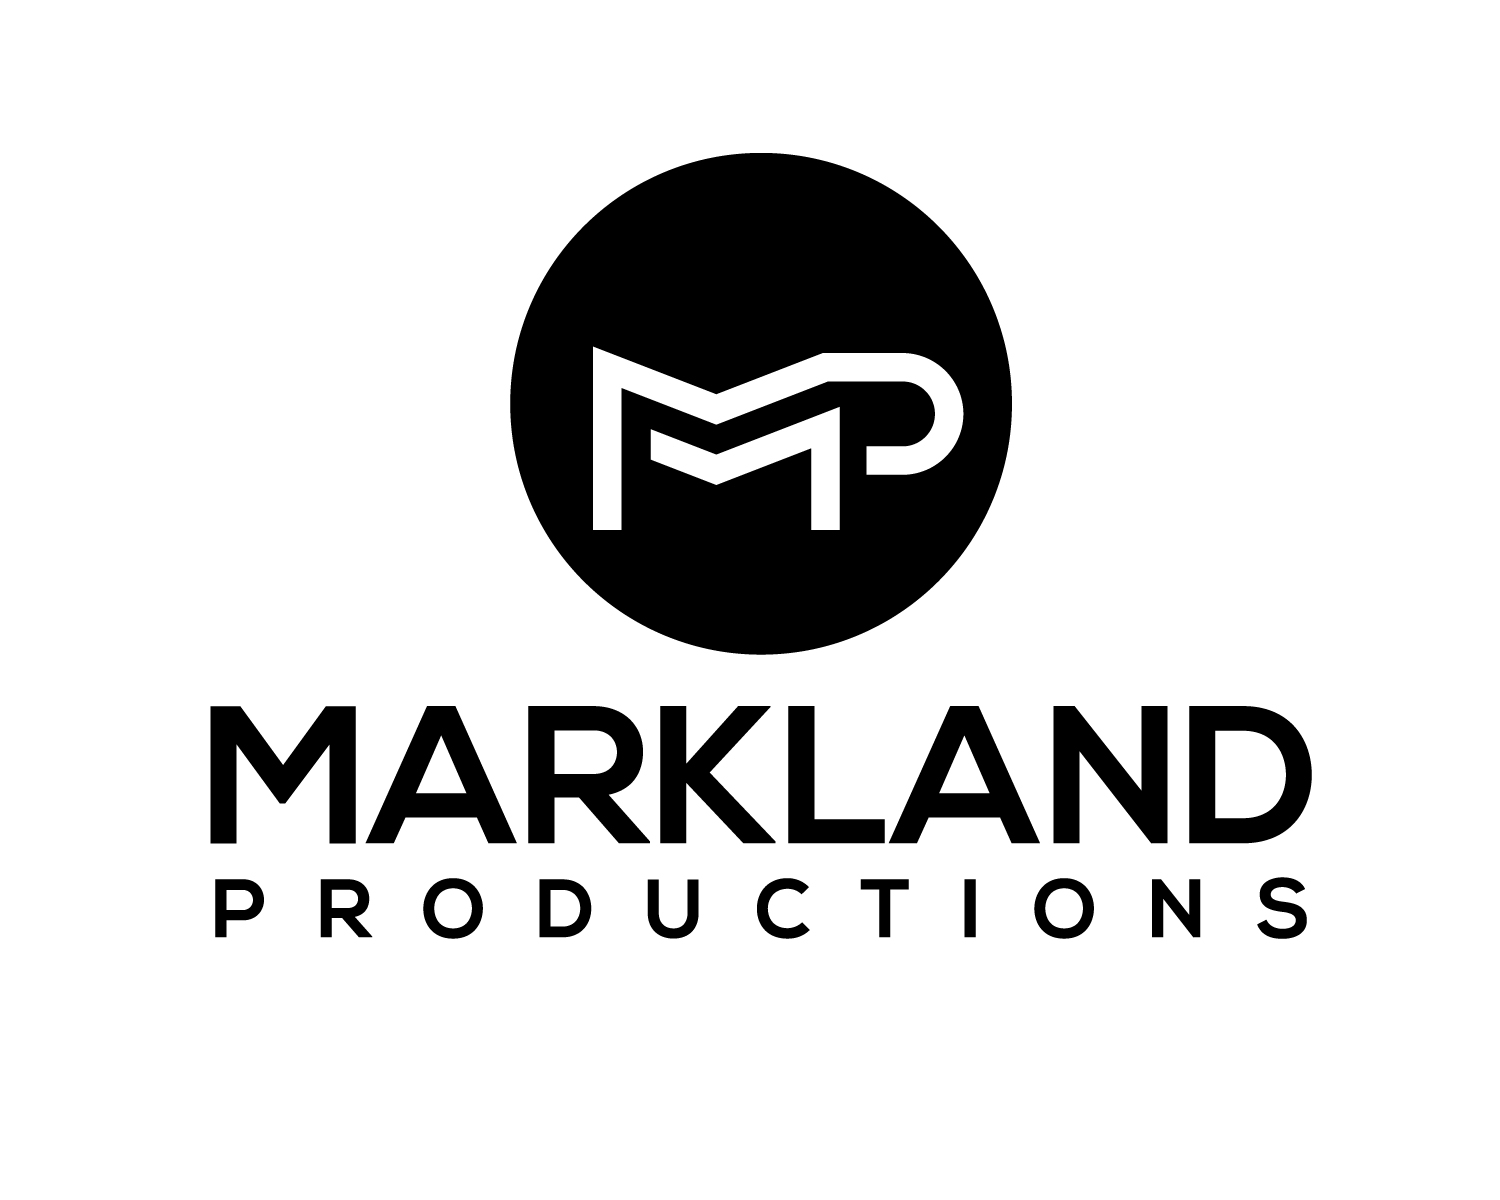 Markland Productions